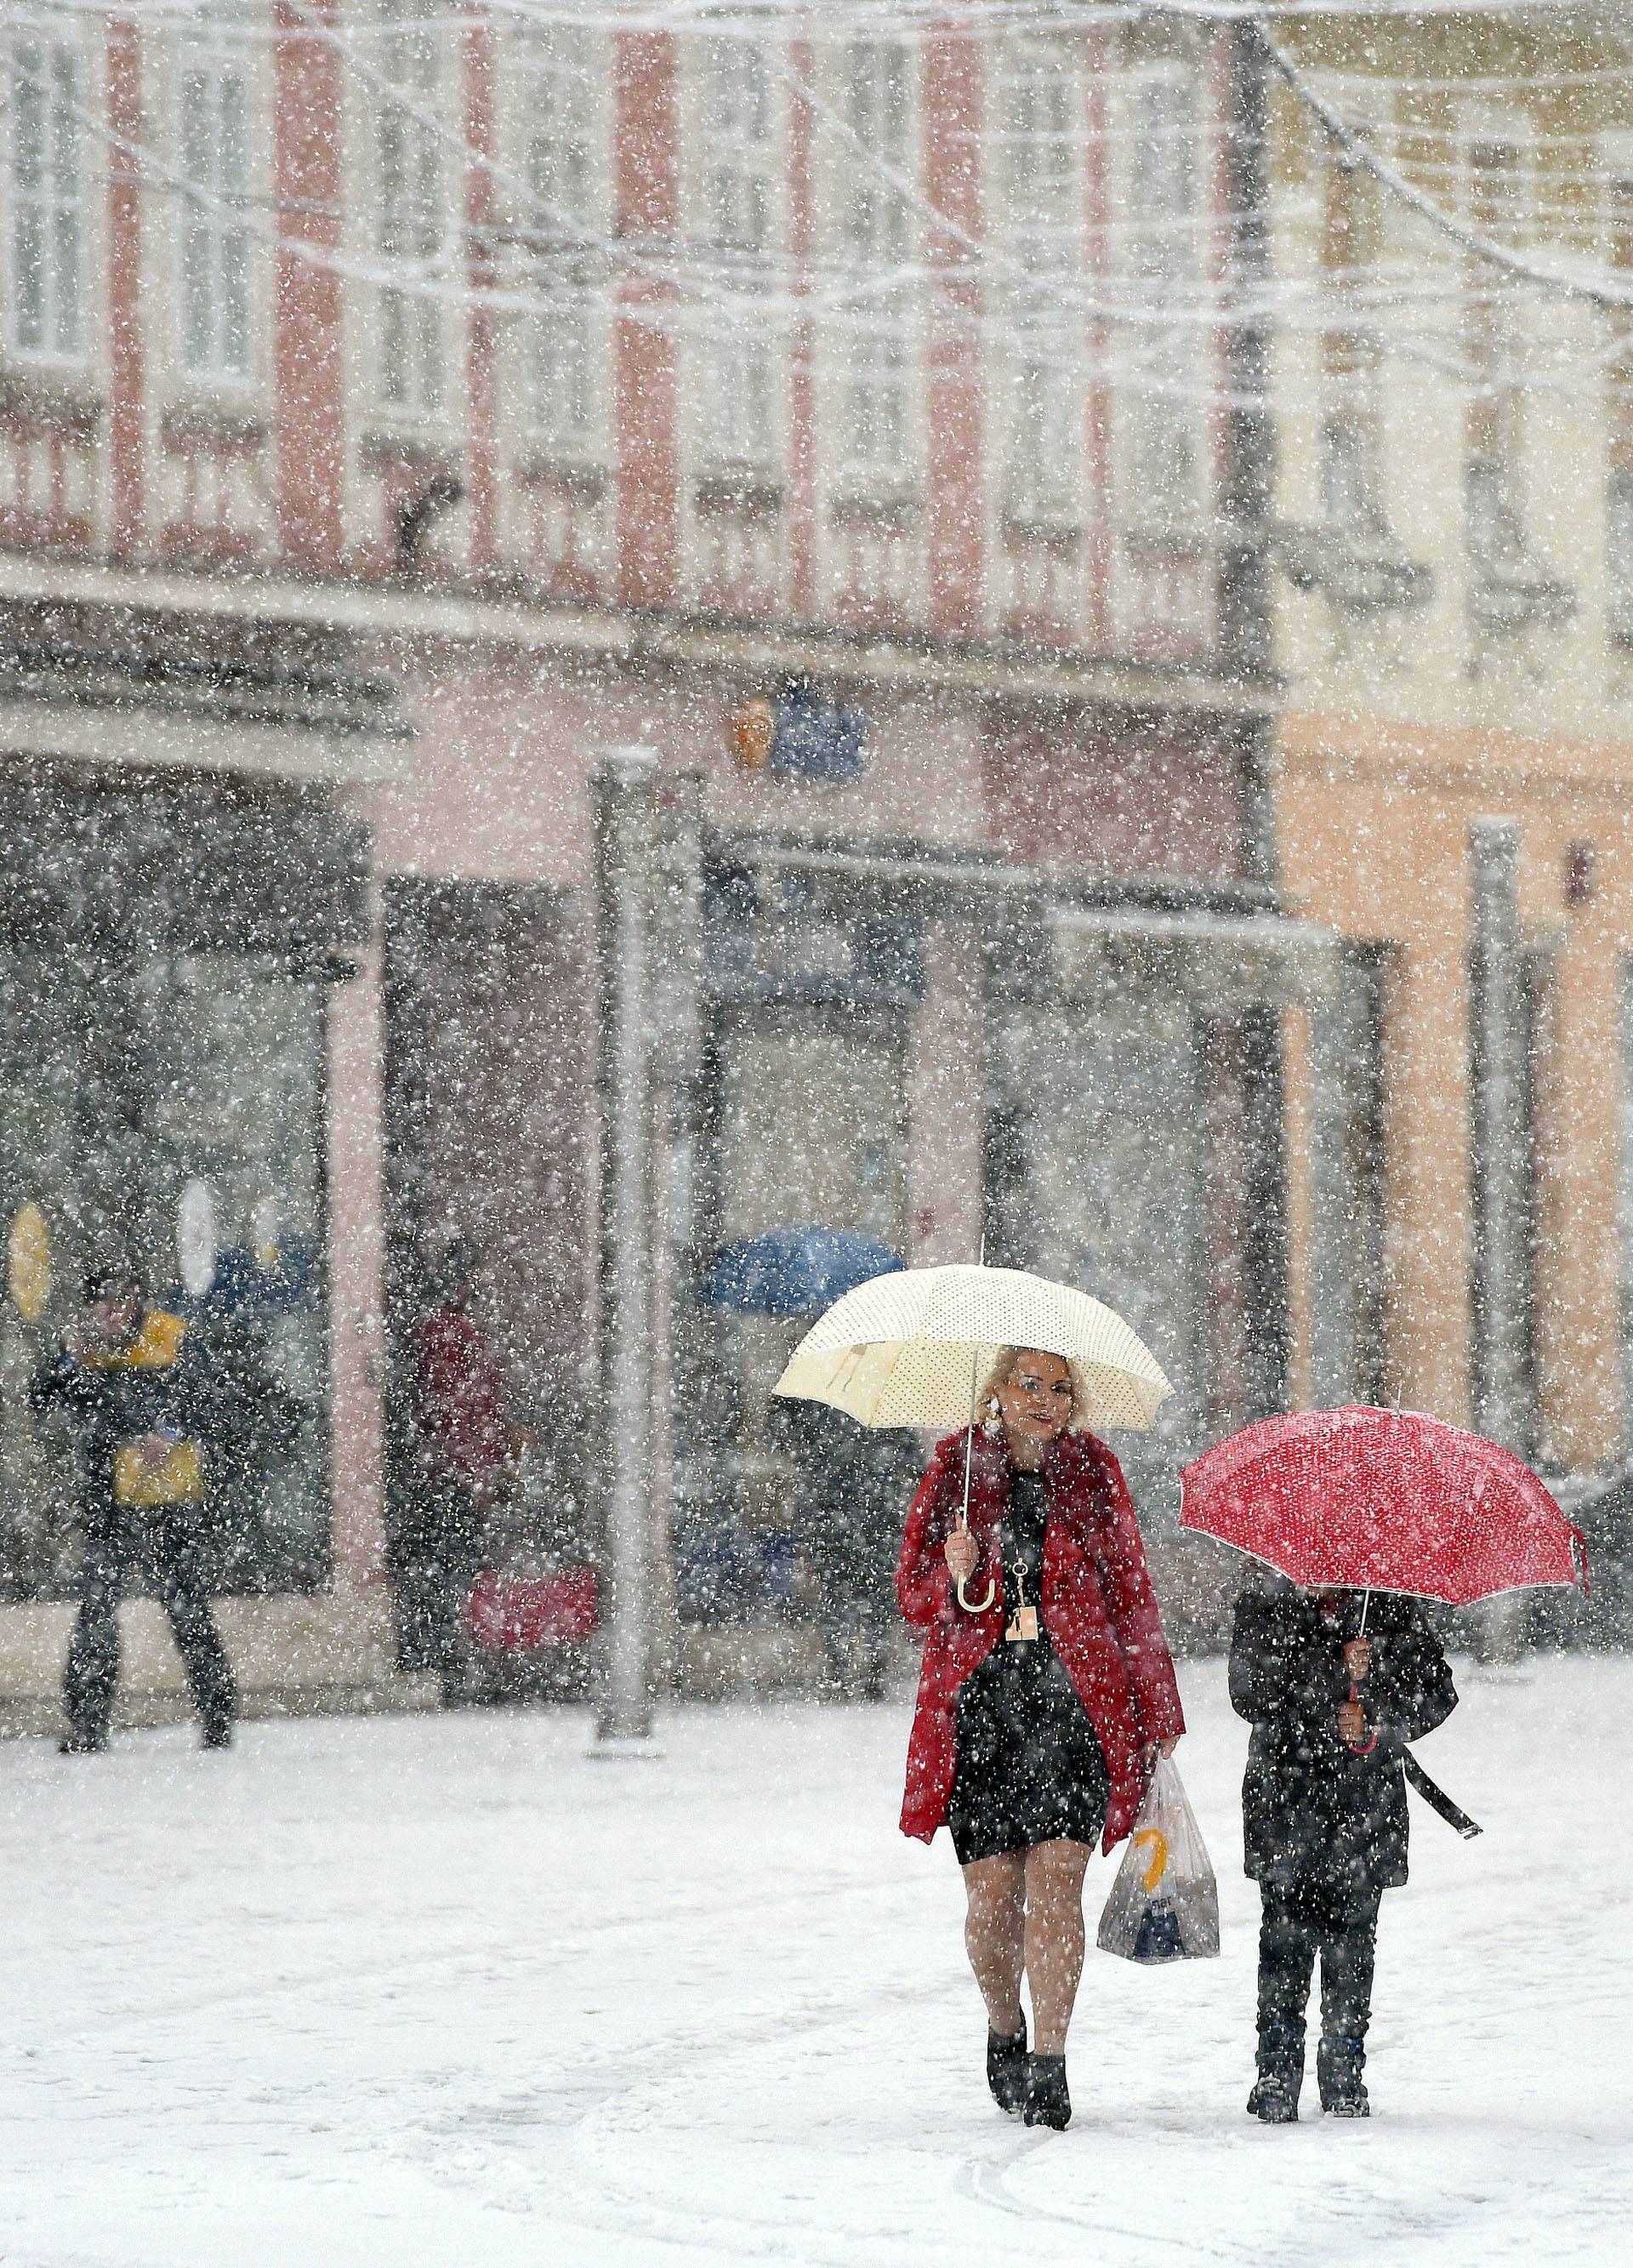 Äakovec: Gusti snijeg zabijelio ulice